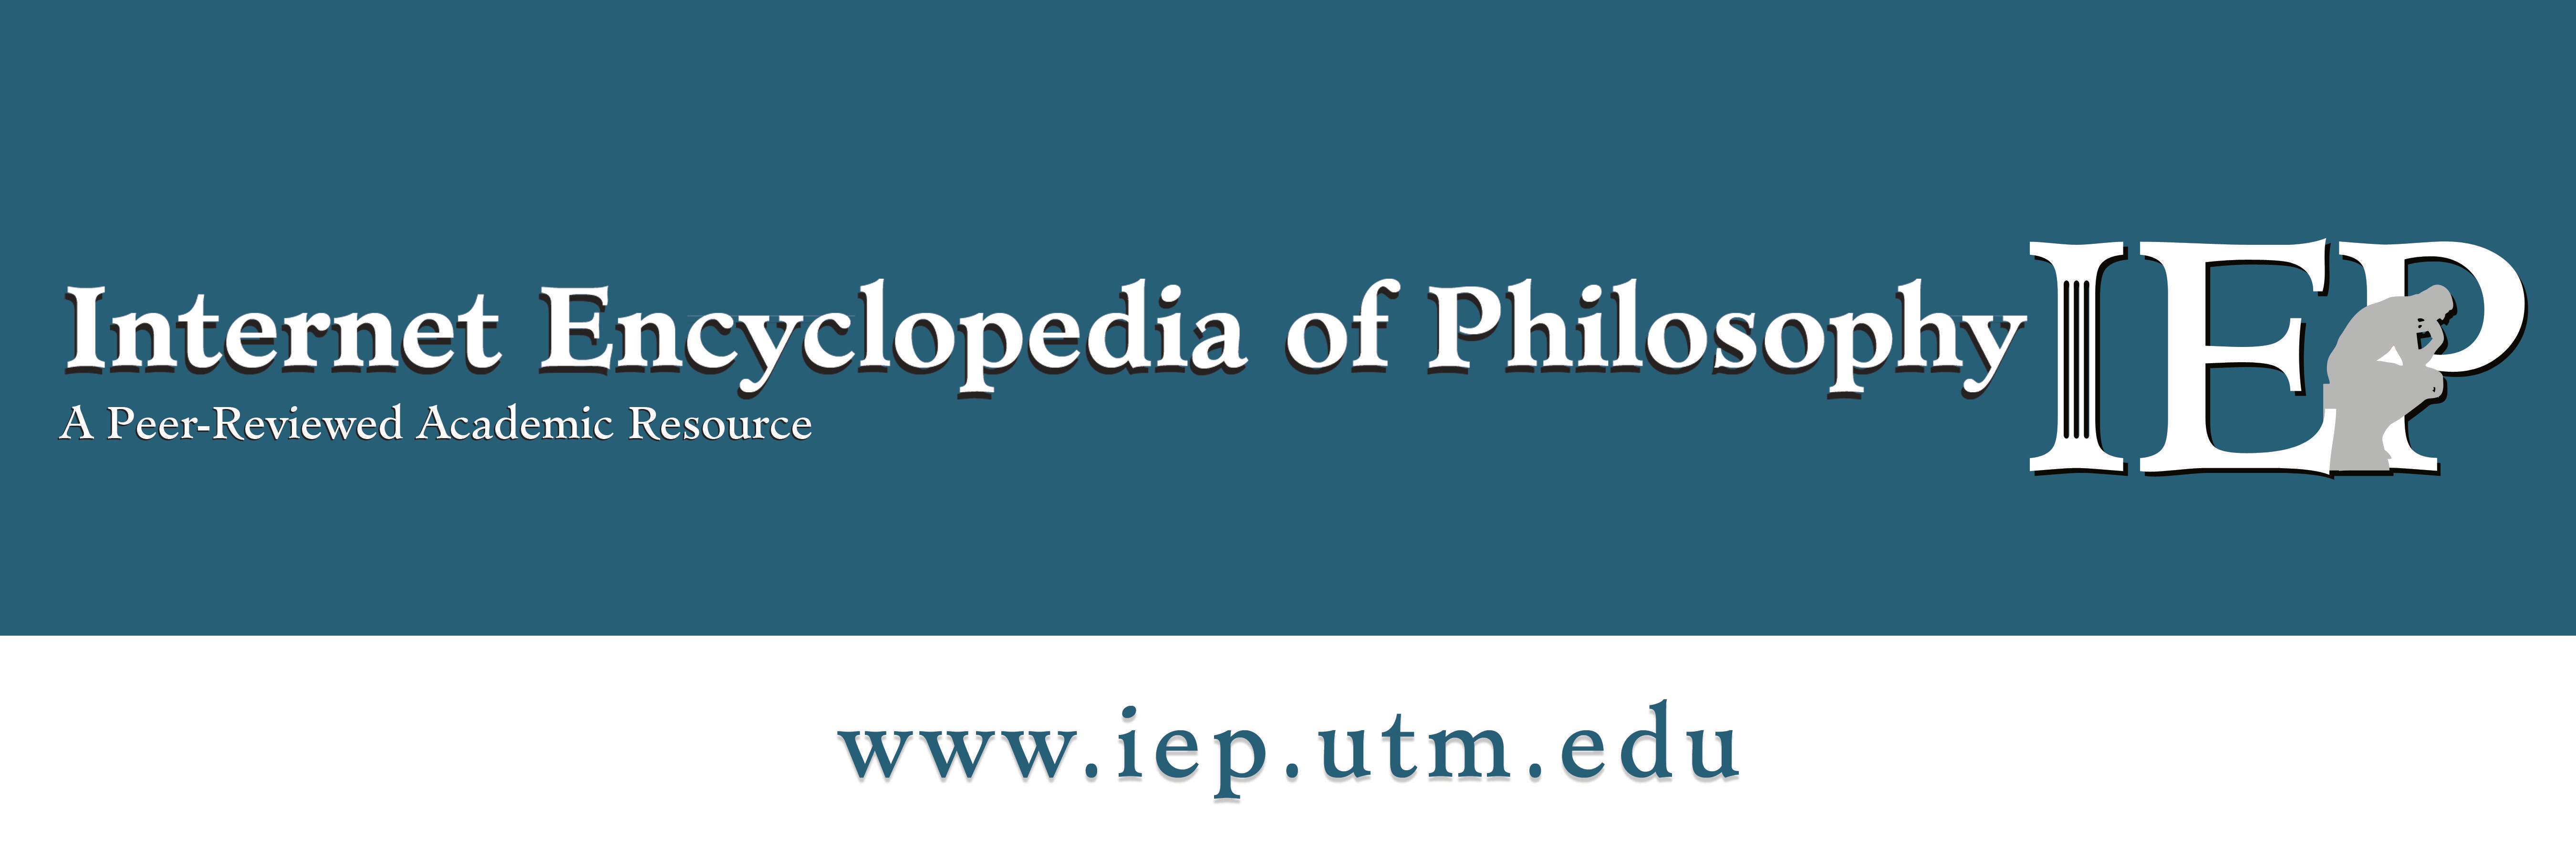 Internet Encyclopedia Logo - Banner_6_2. Internet Encyclopedia of Philosophy